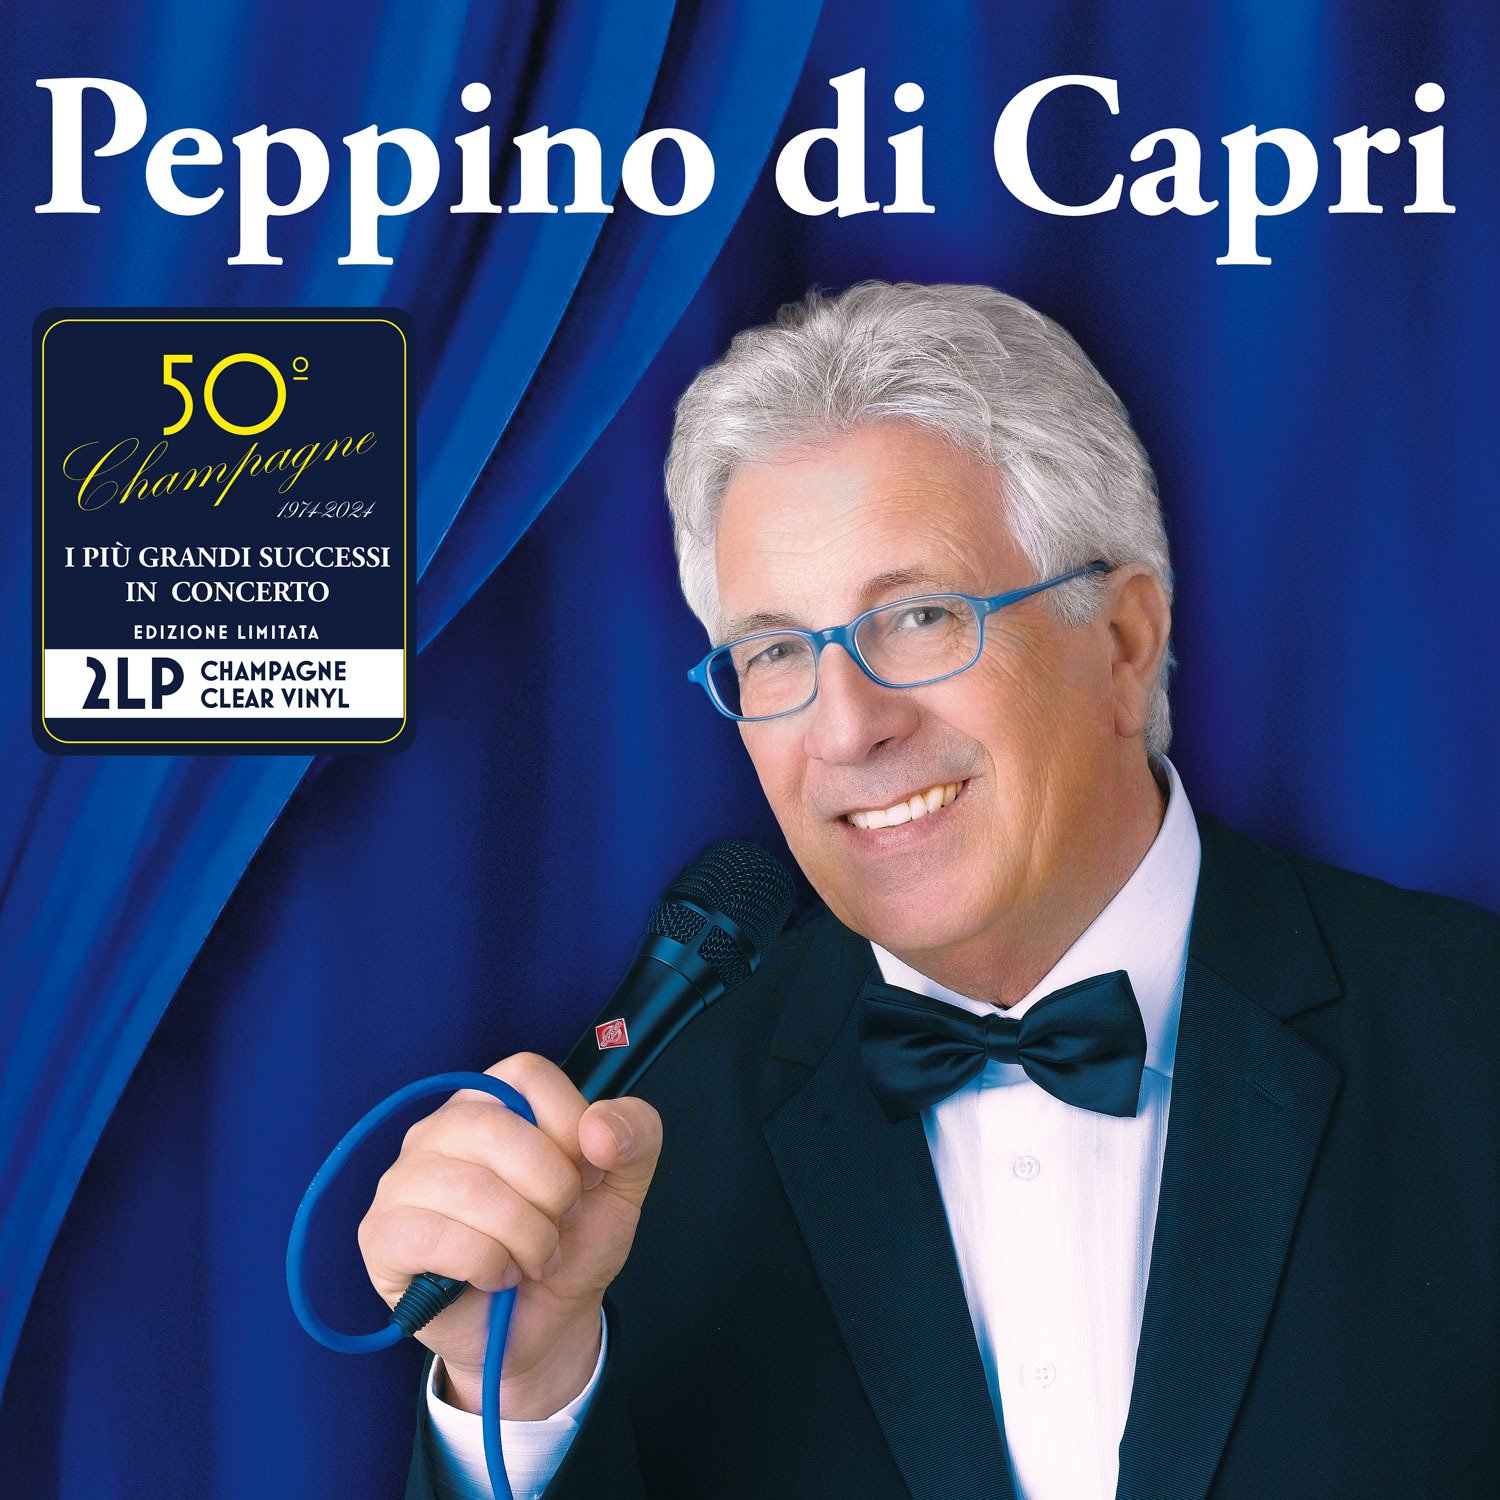 CD Shop - DI CAPRI, PEPPINO 50 CHAMPAGNE